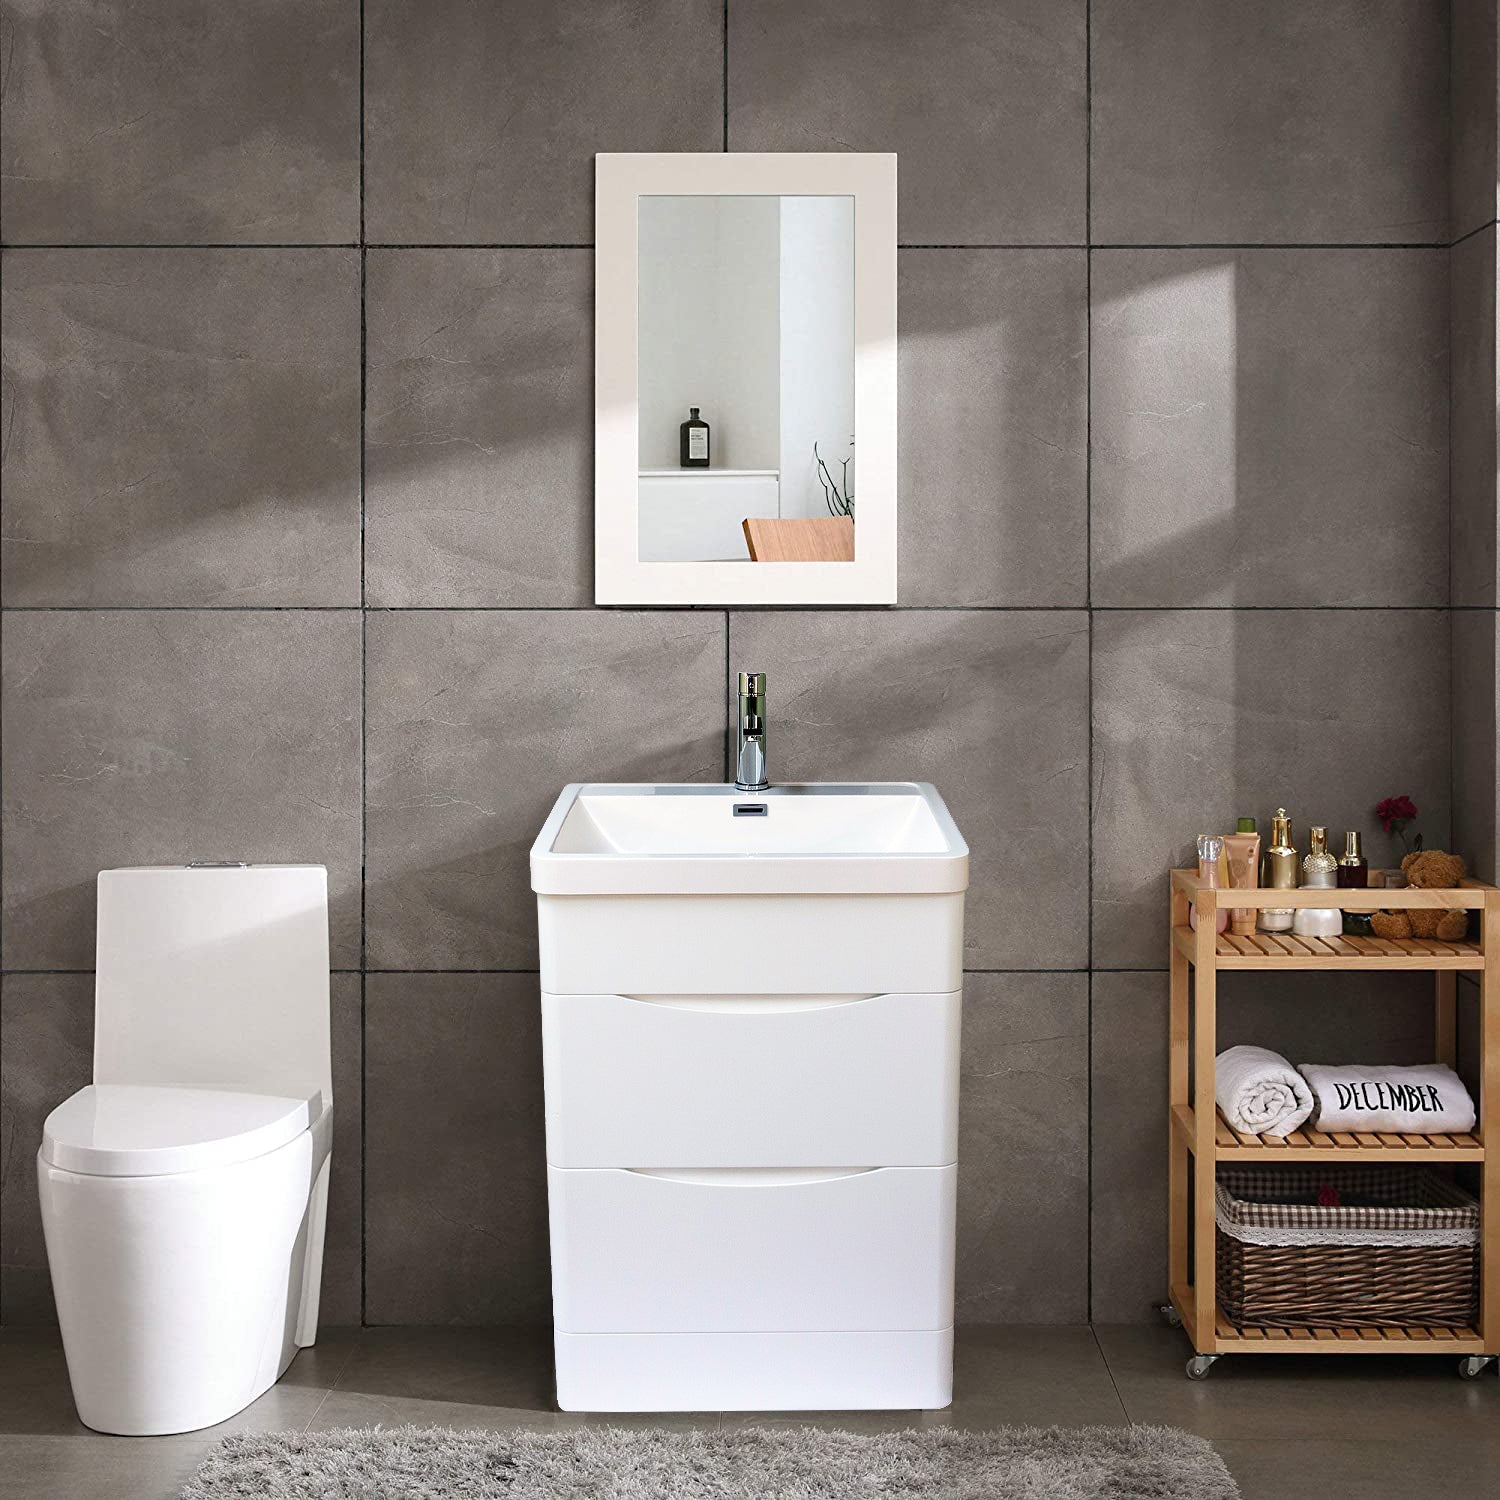 Stockholm 24" W x 18" D x 33" H Bathroom Vanity in White with Ceramic Vanity Top